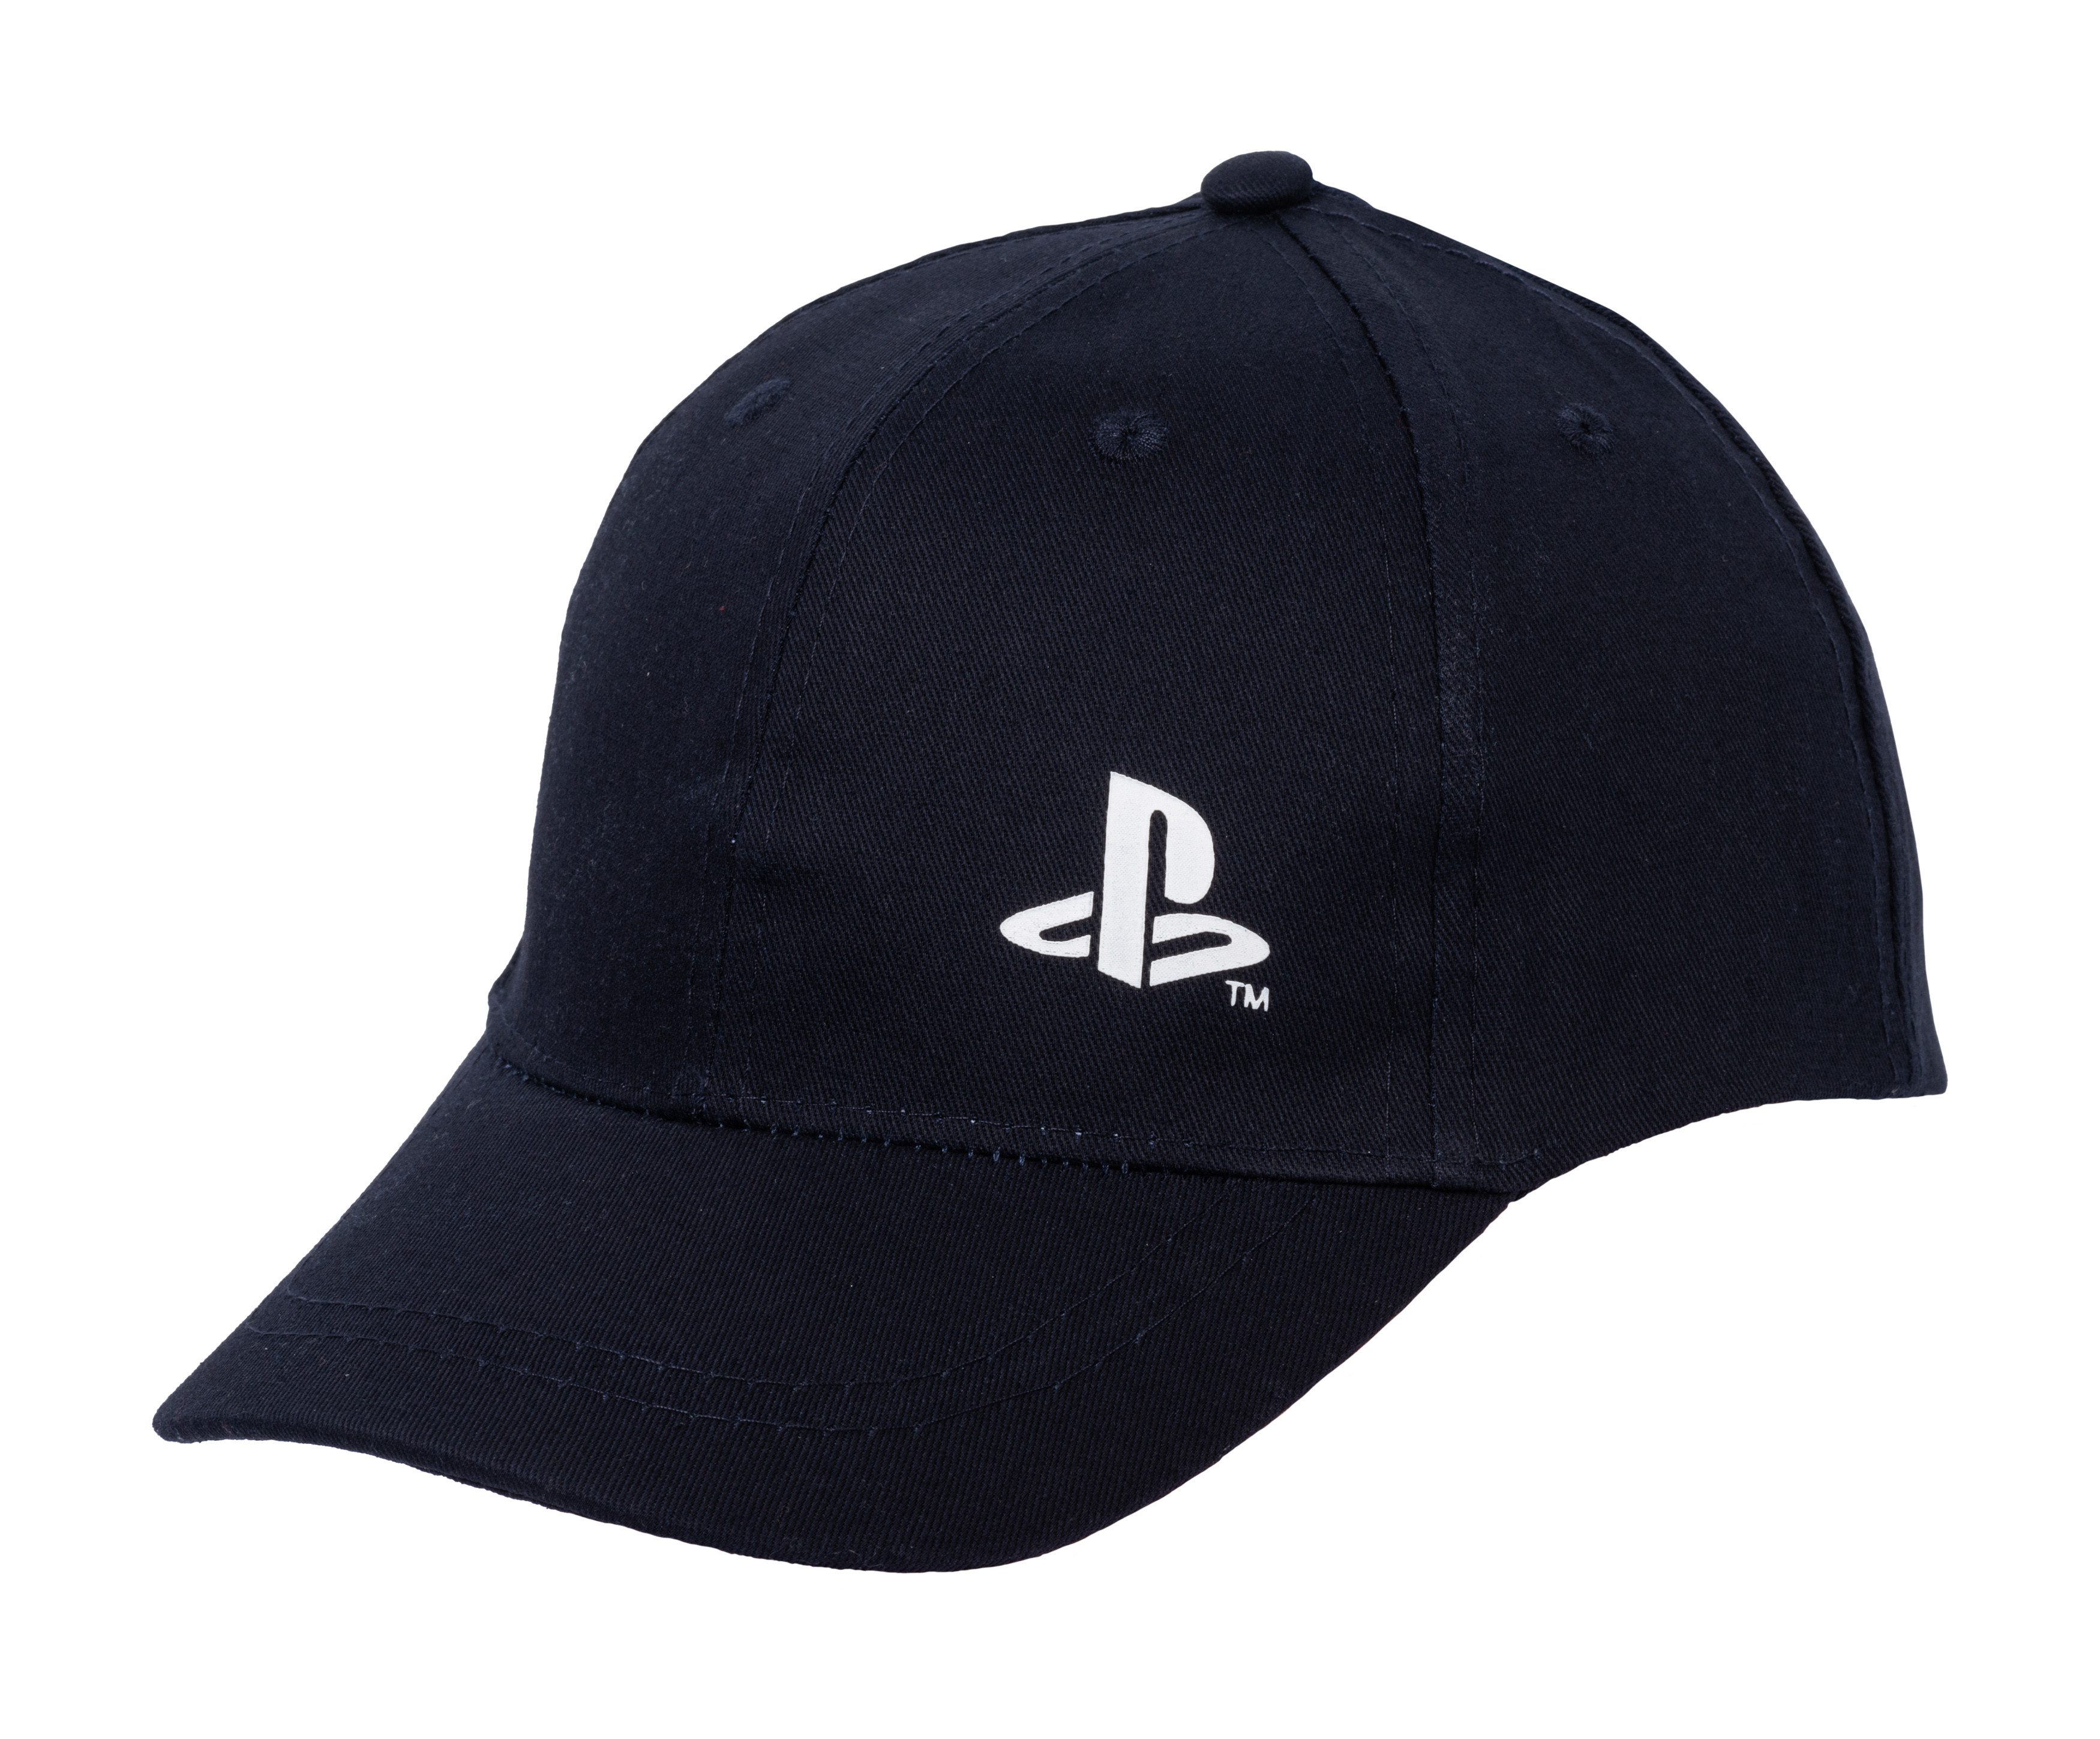 Playstation Schirmmütze Kappe - PlayStation Logo (NEU & OVP)